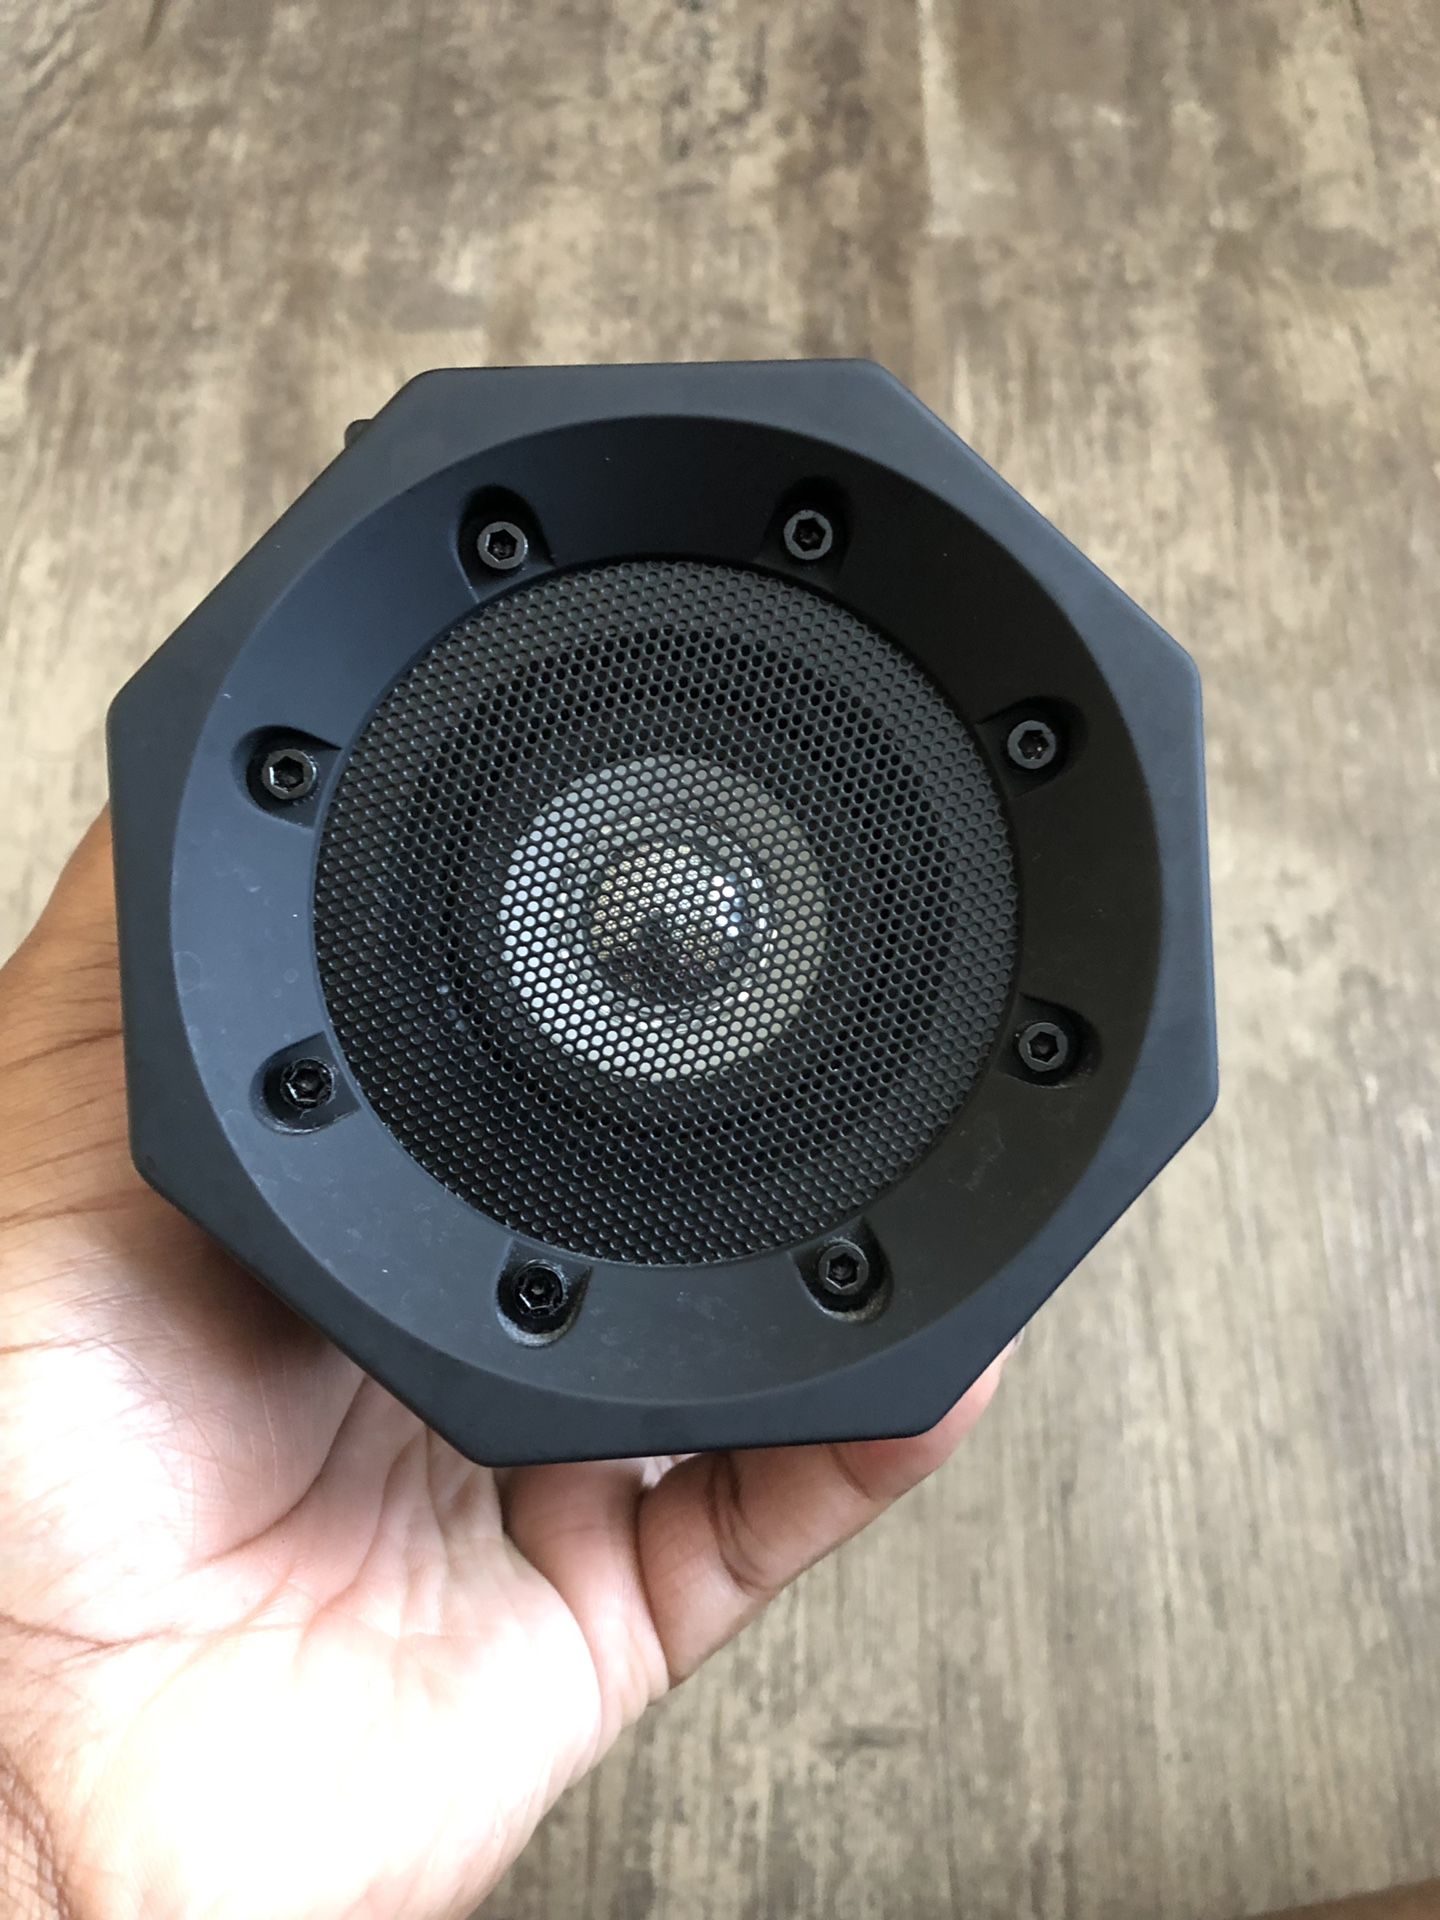 Boomtouch speaker